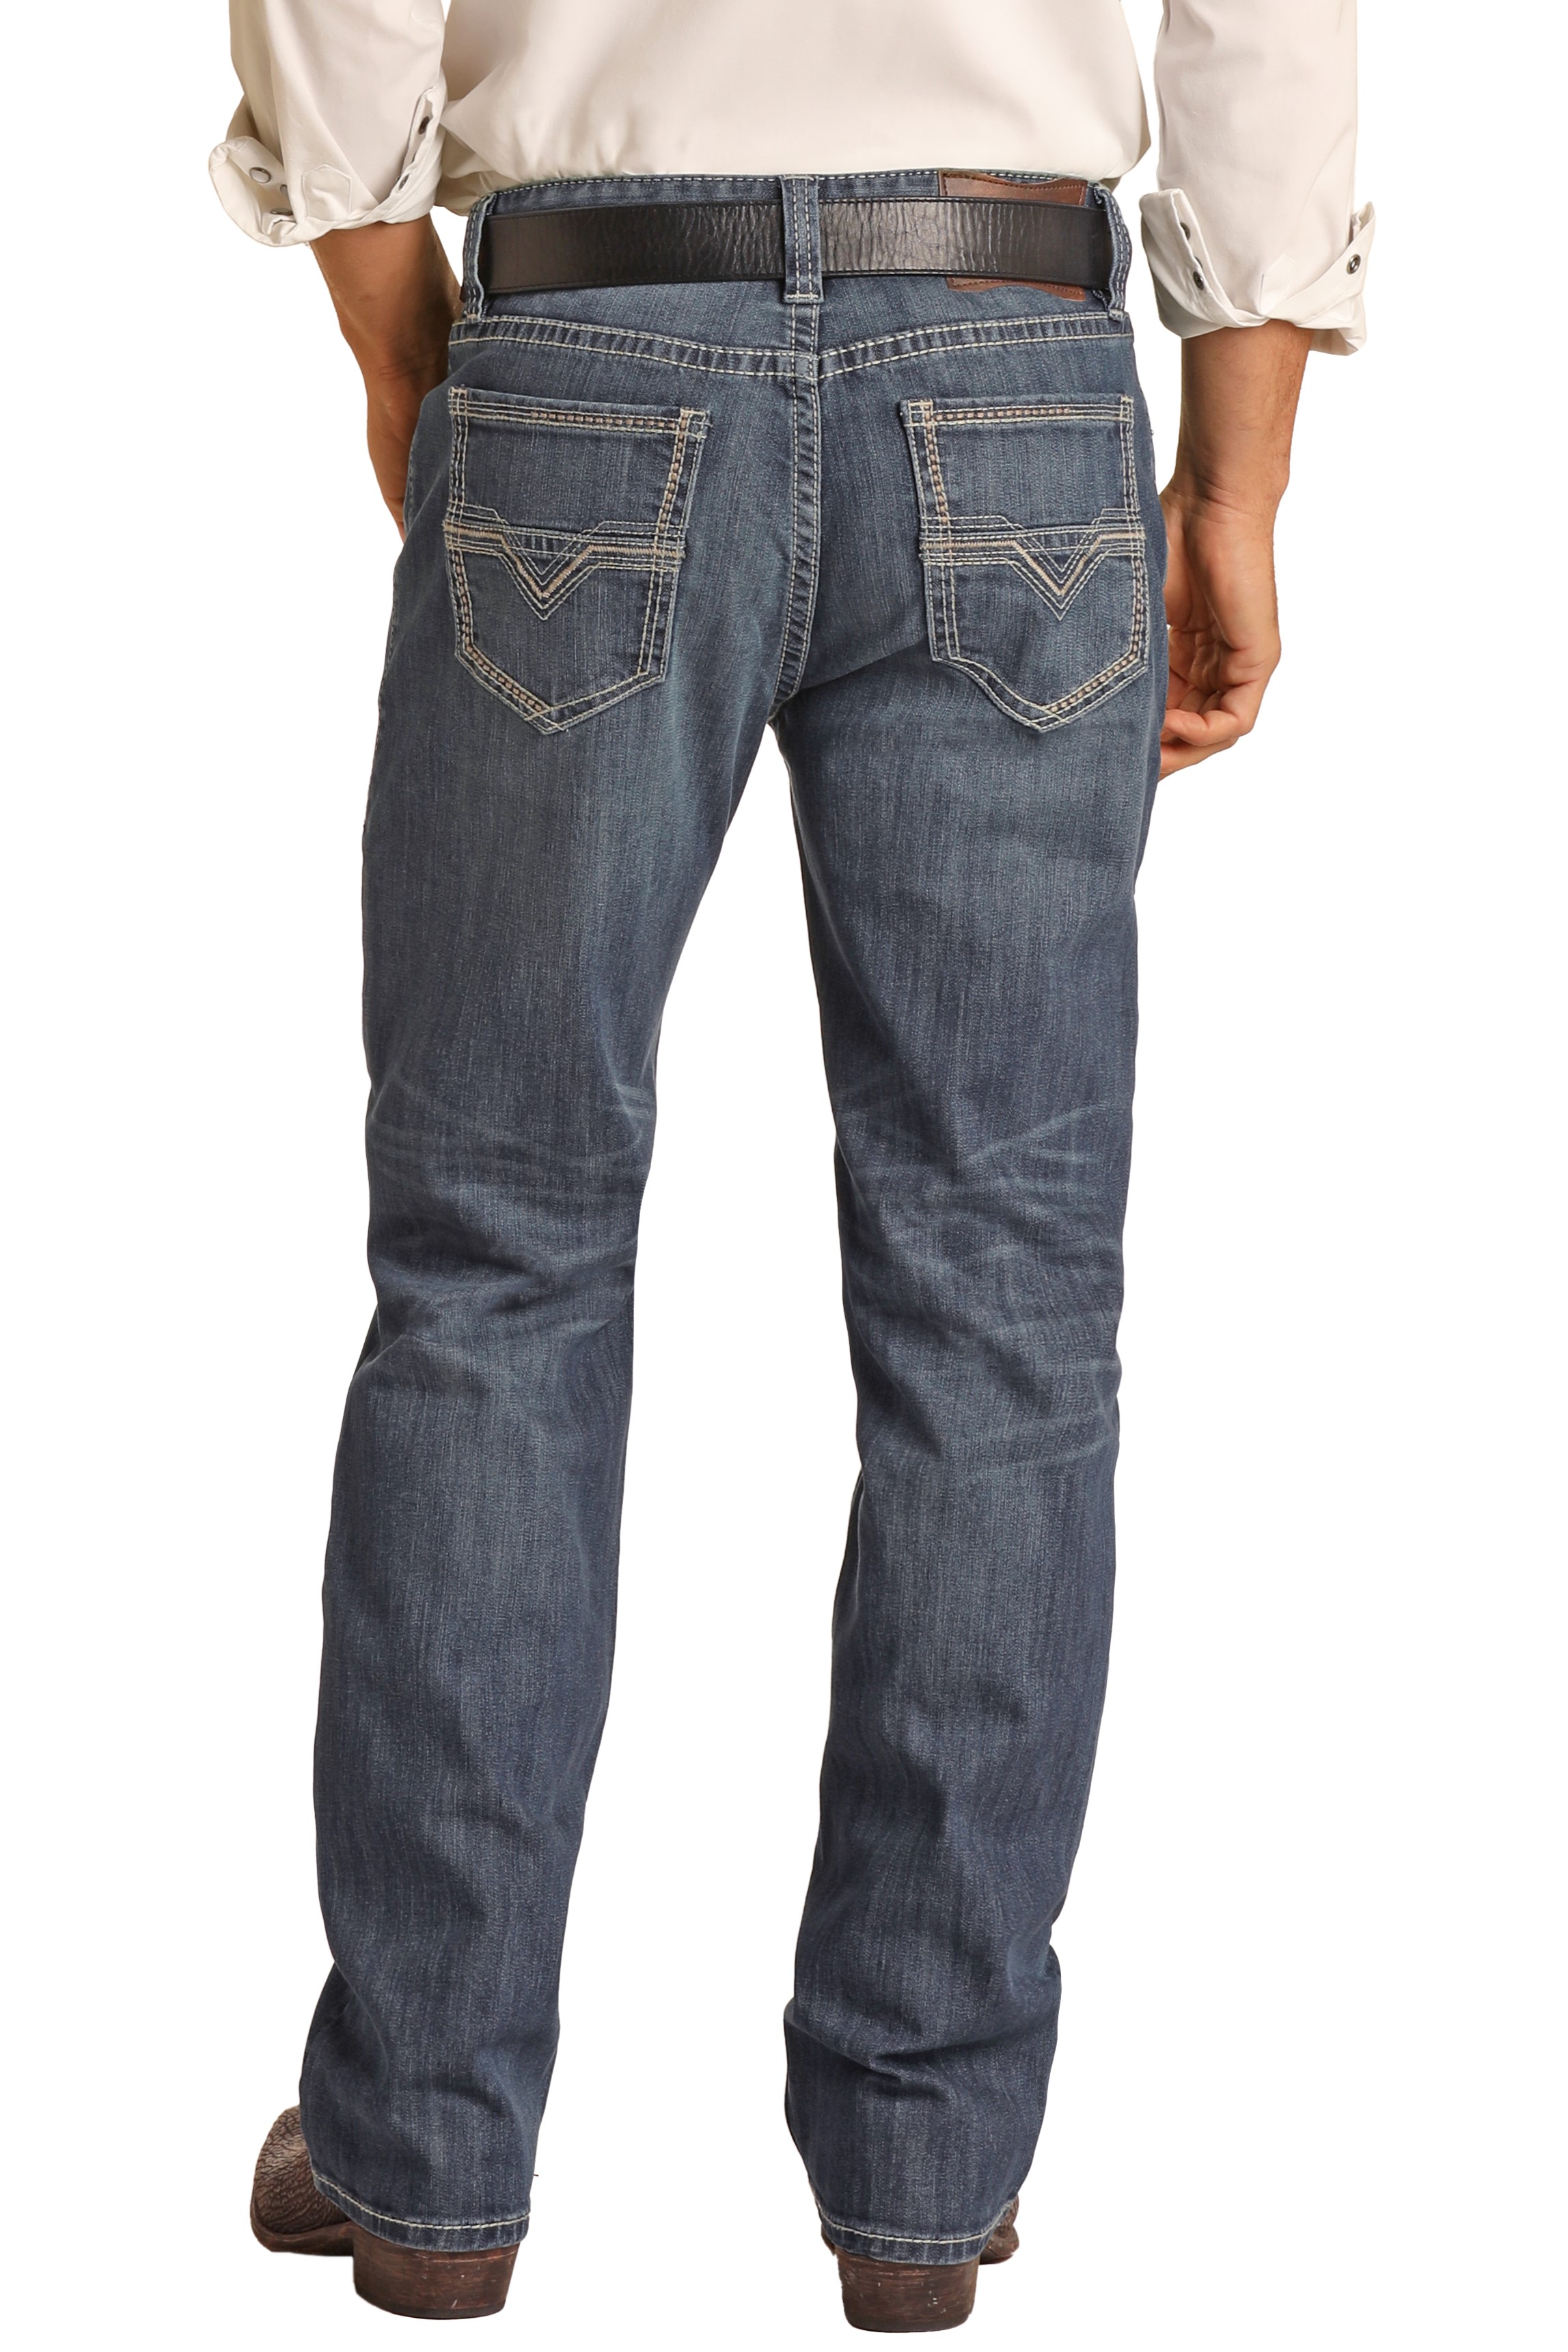 Men's 517 Black Bootcut Jeans